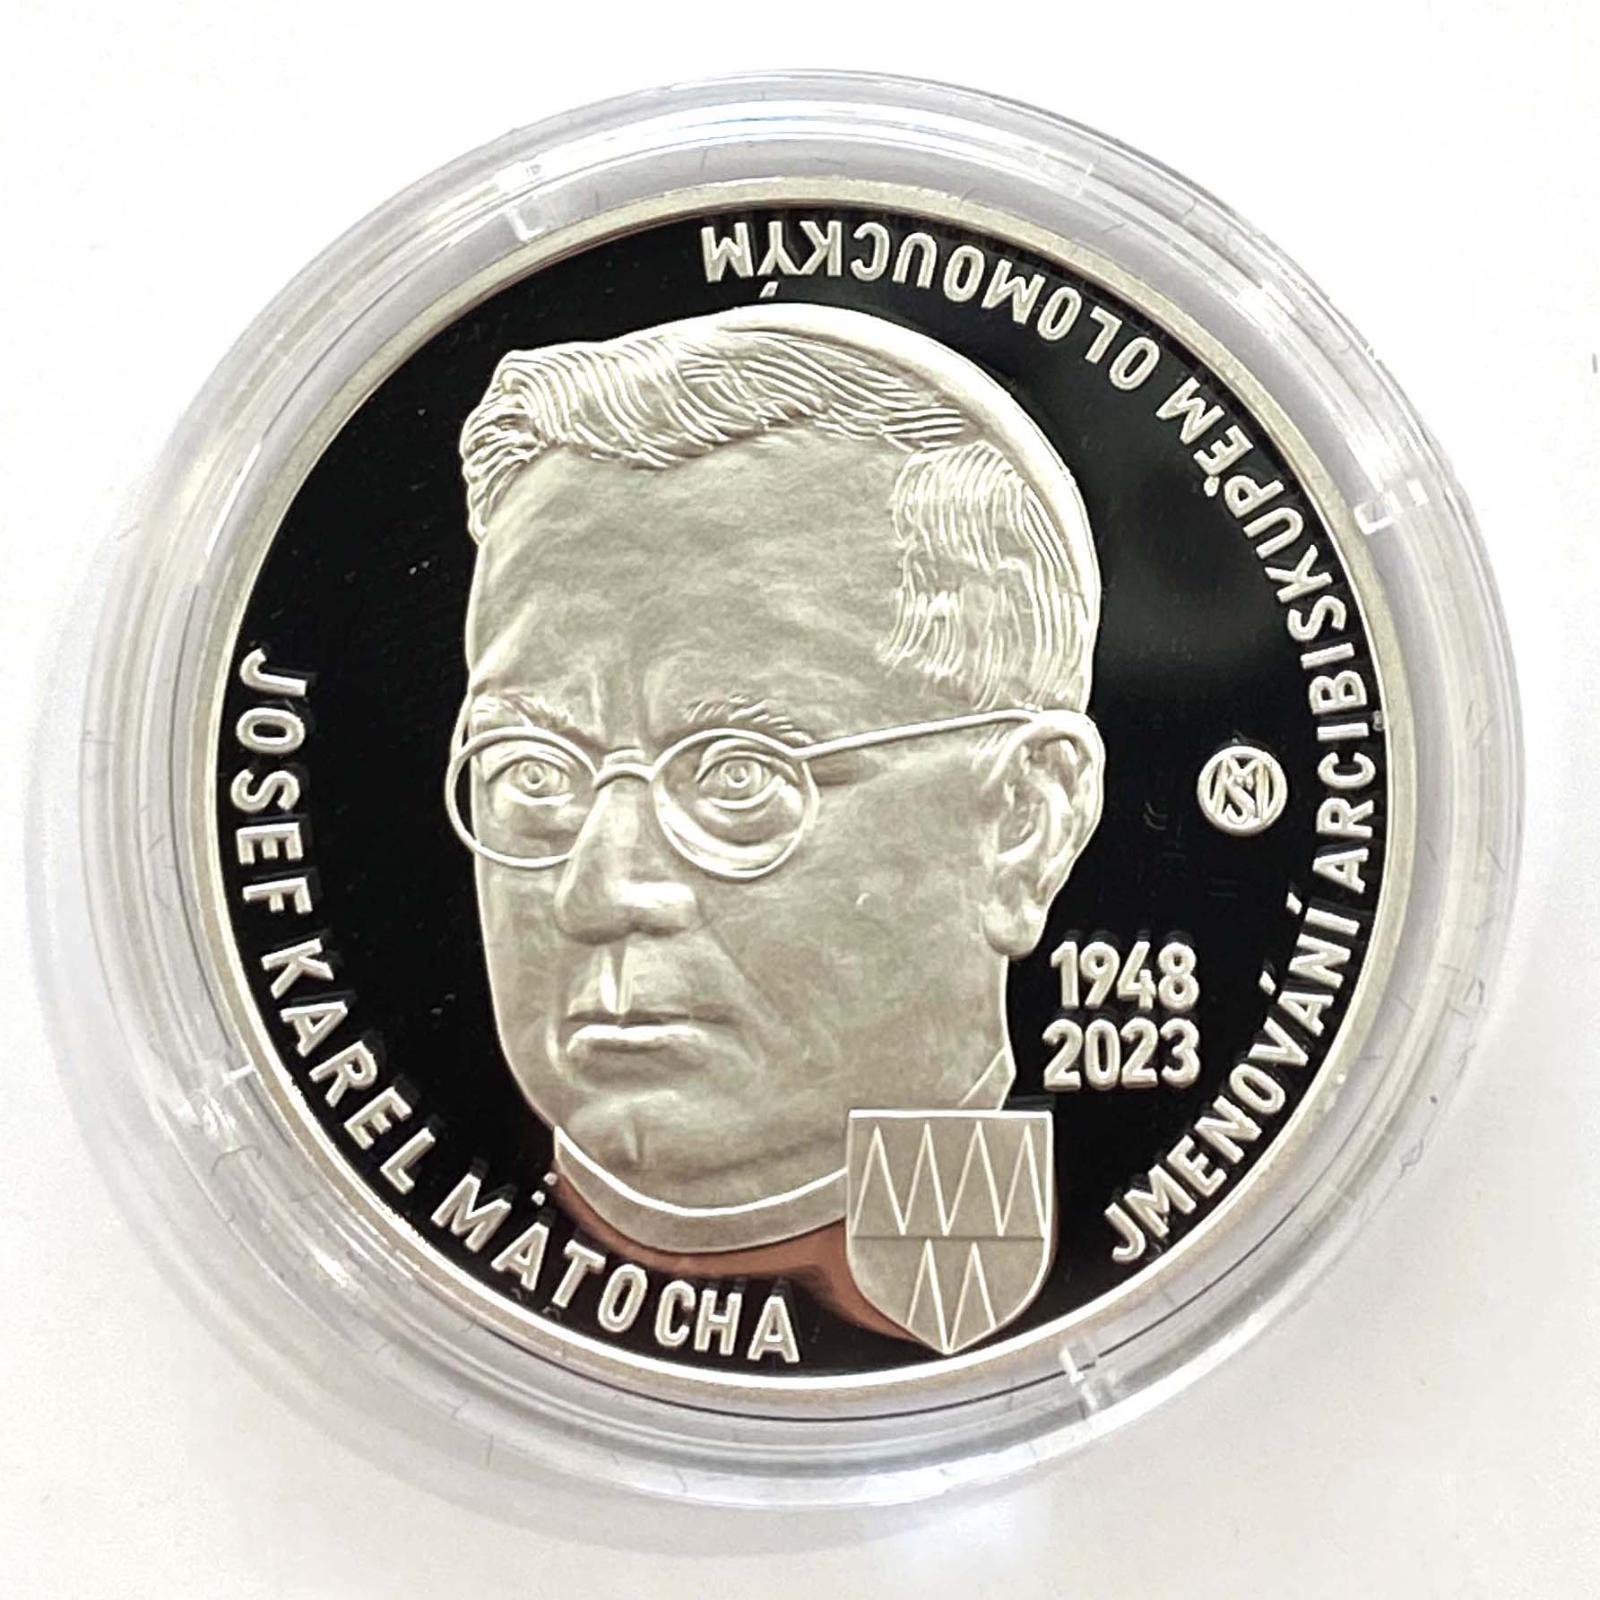 Strieborná minca 8,00 € 2023 Josef Karel Matocha PP - Numizmatika